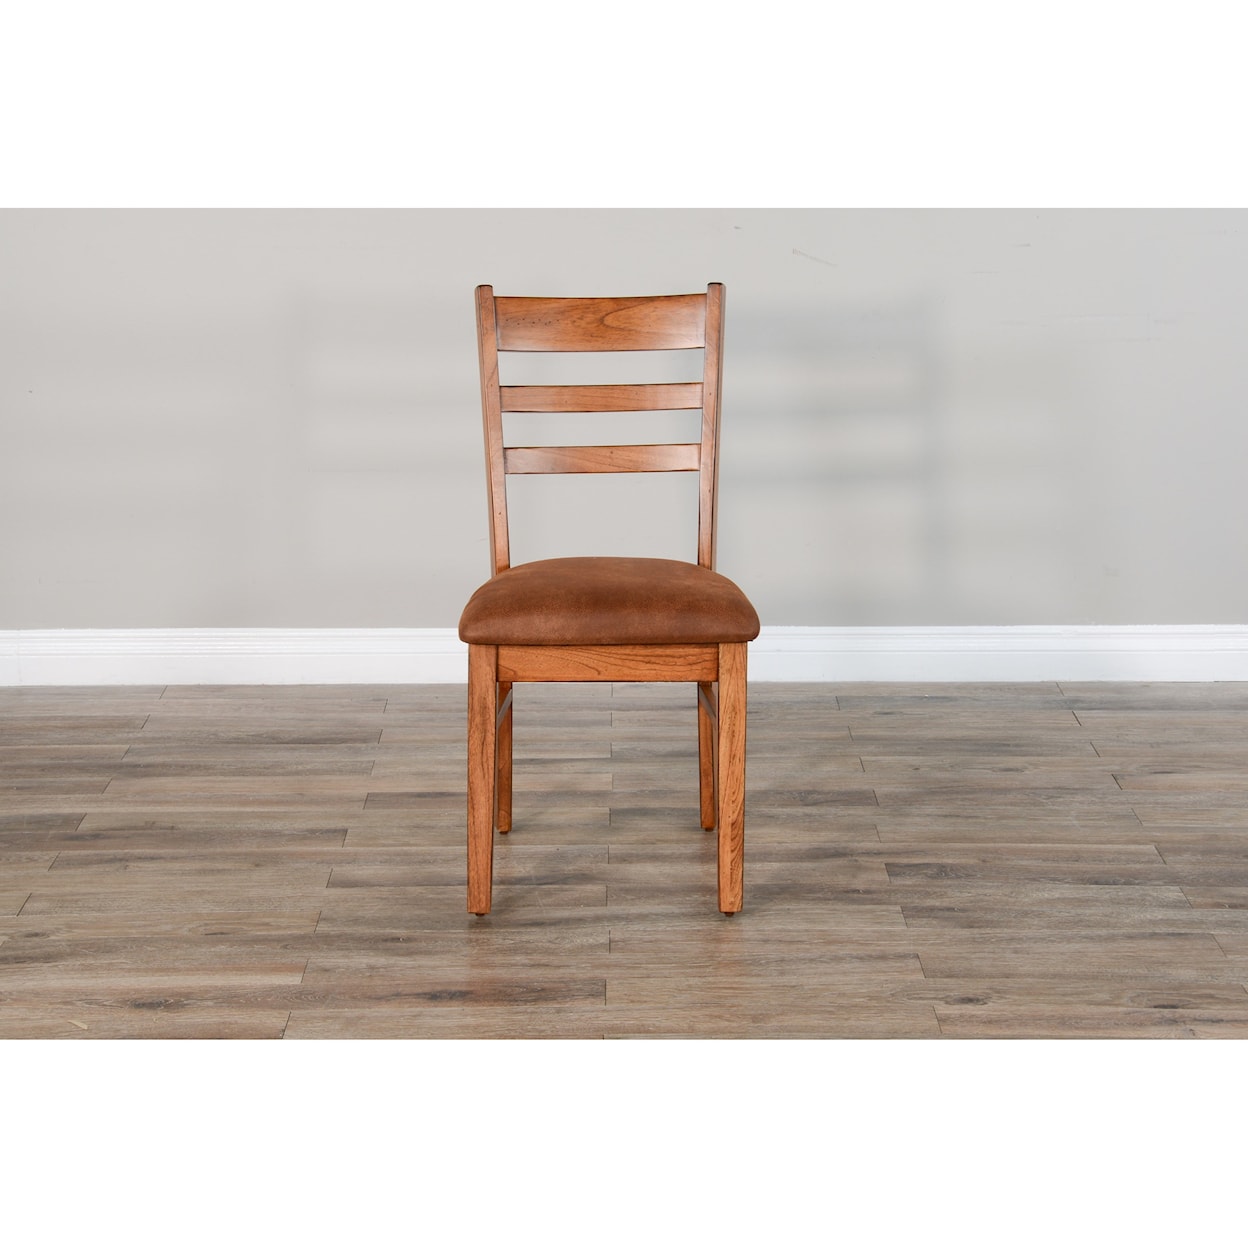 Sunny Designs Sedona 2 Ladderback Chair with Cushion Seat